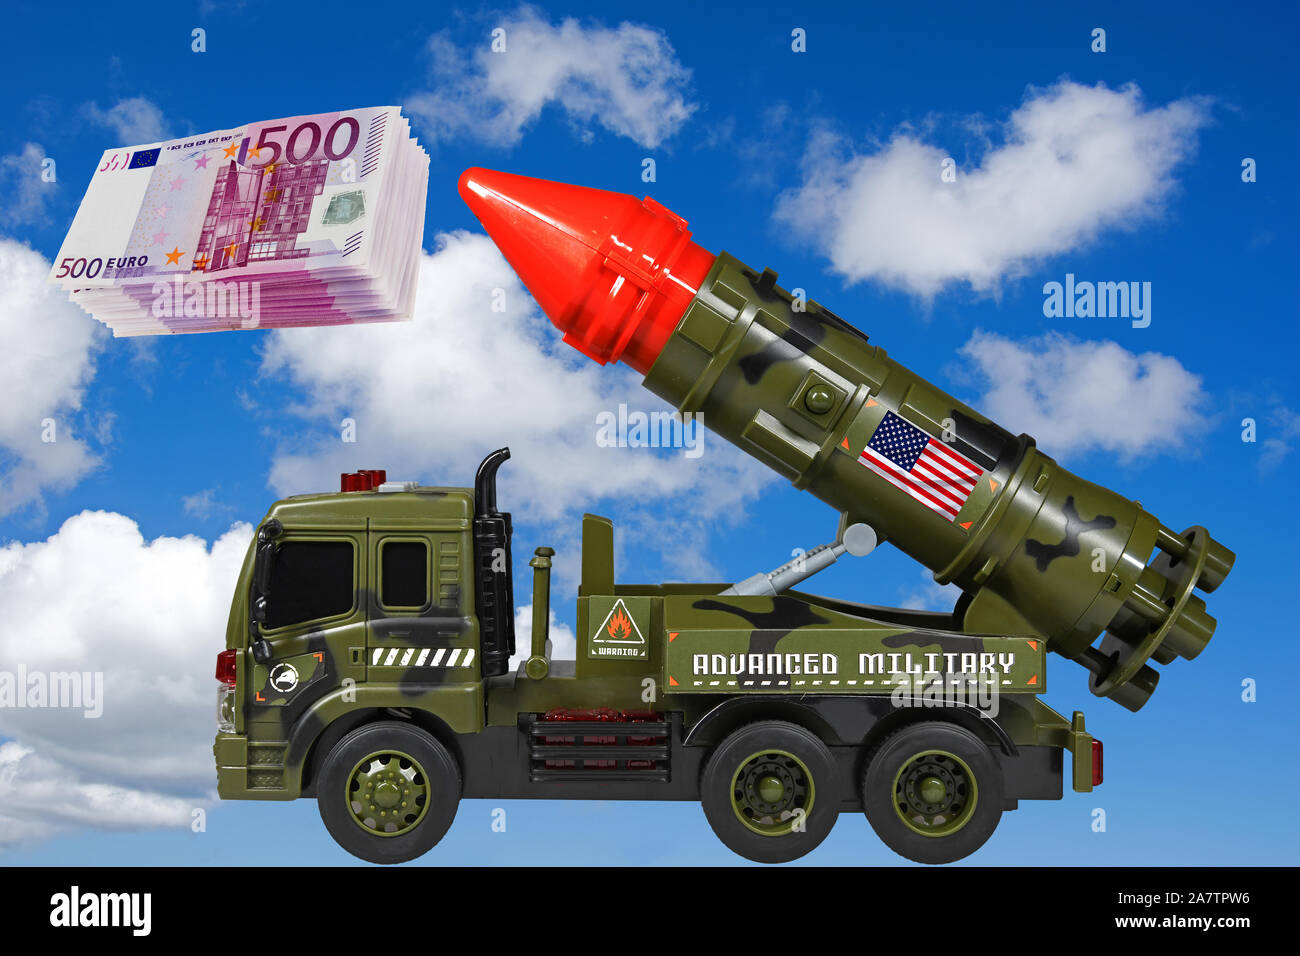 Kriegswaffen, Waffenbexporte, LKW, Rakete, Raketen, Raketenwerfer, mobile Raketenabschussrampe, USA, Stock Photo